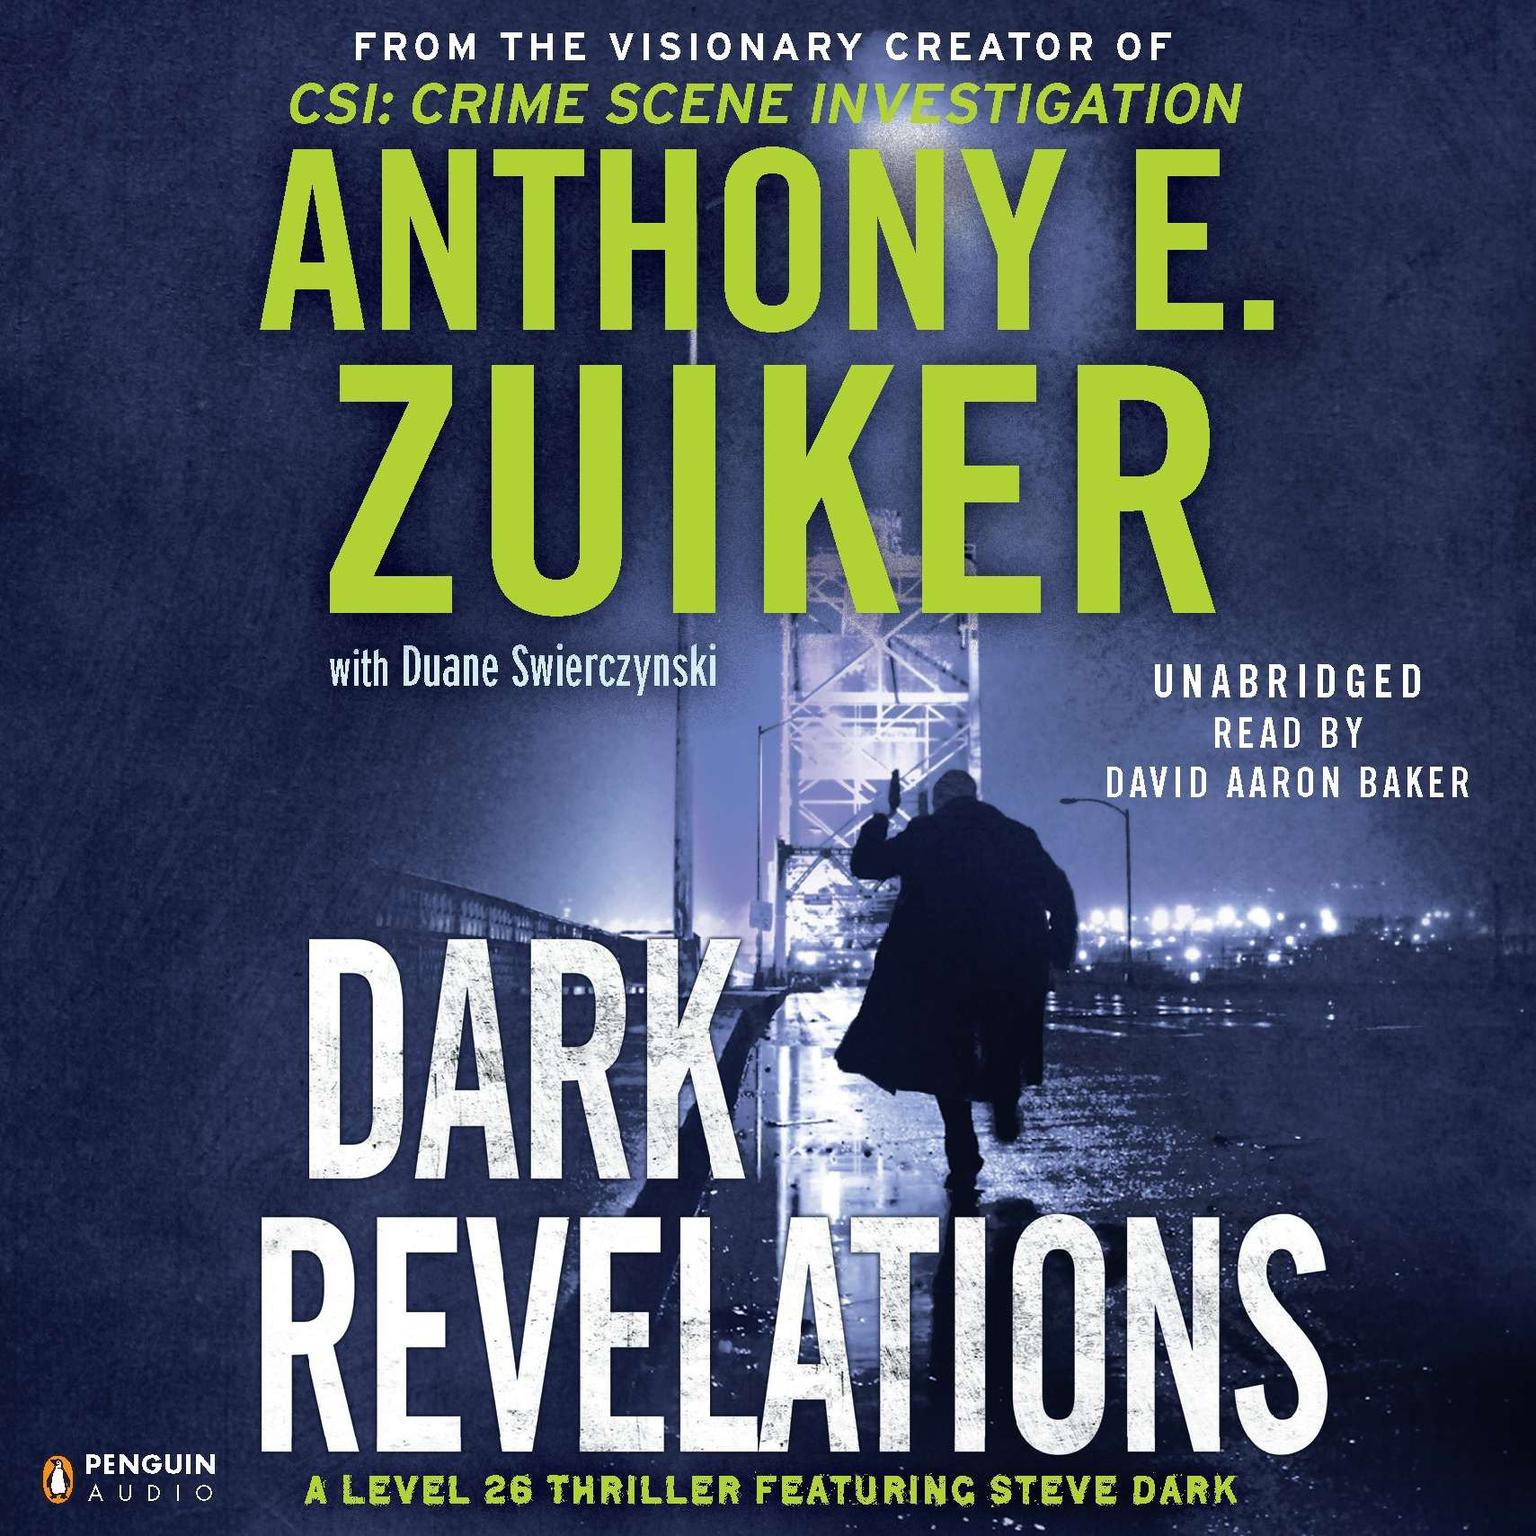 Dark Revelations Audiobook, by Anthony E. Zuiker